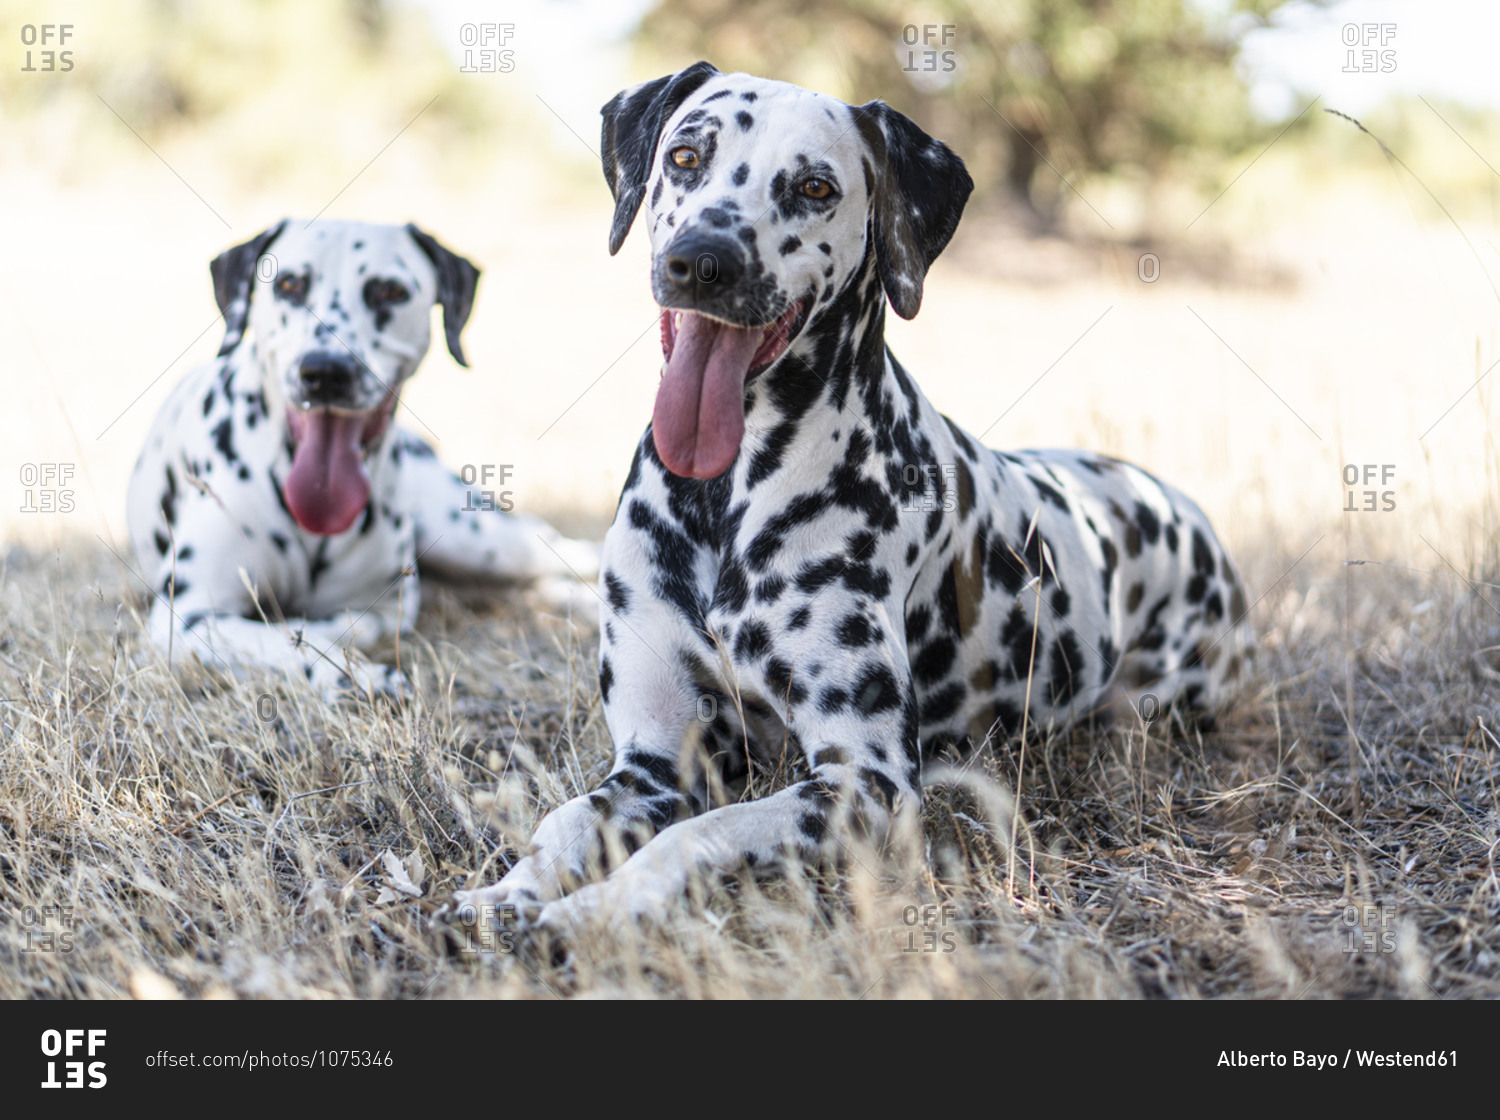 Dalmatian dogs resting on field